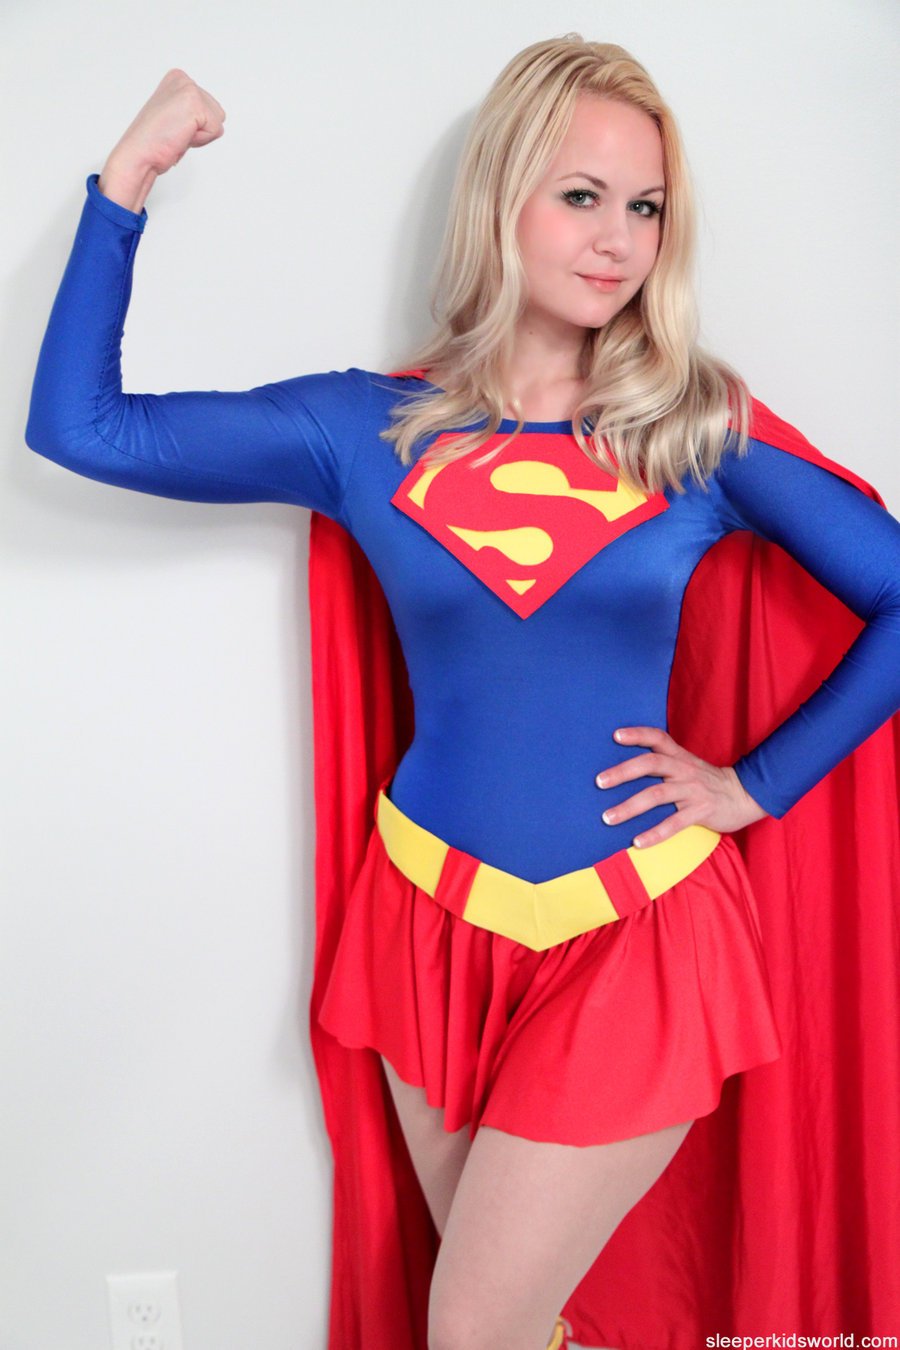 Alisakiss is Supergirl